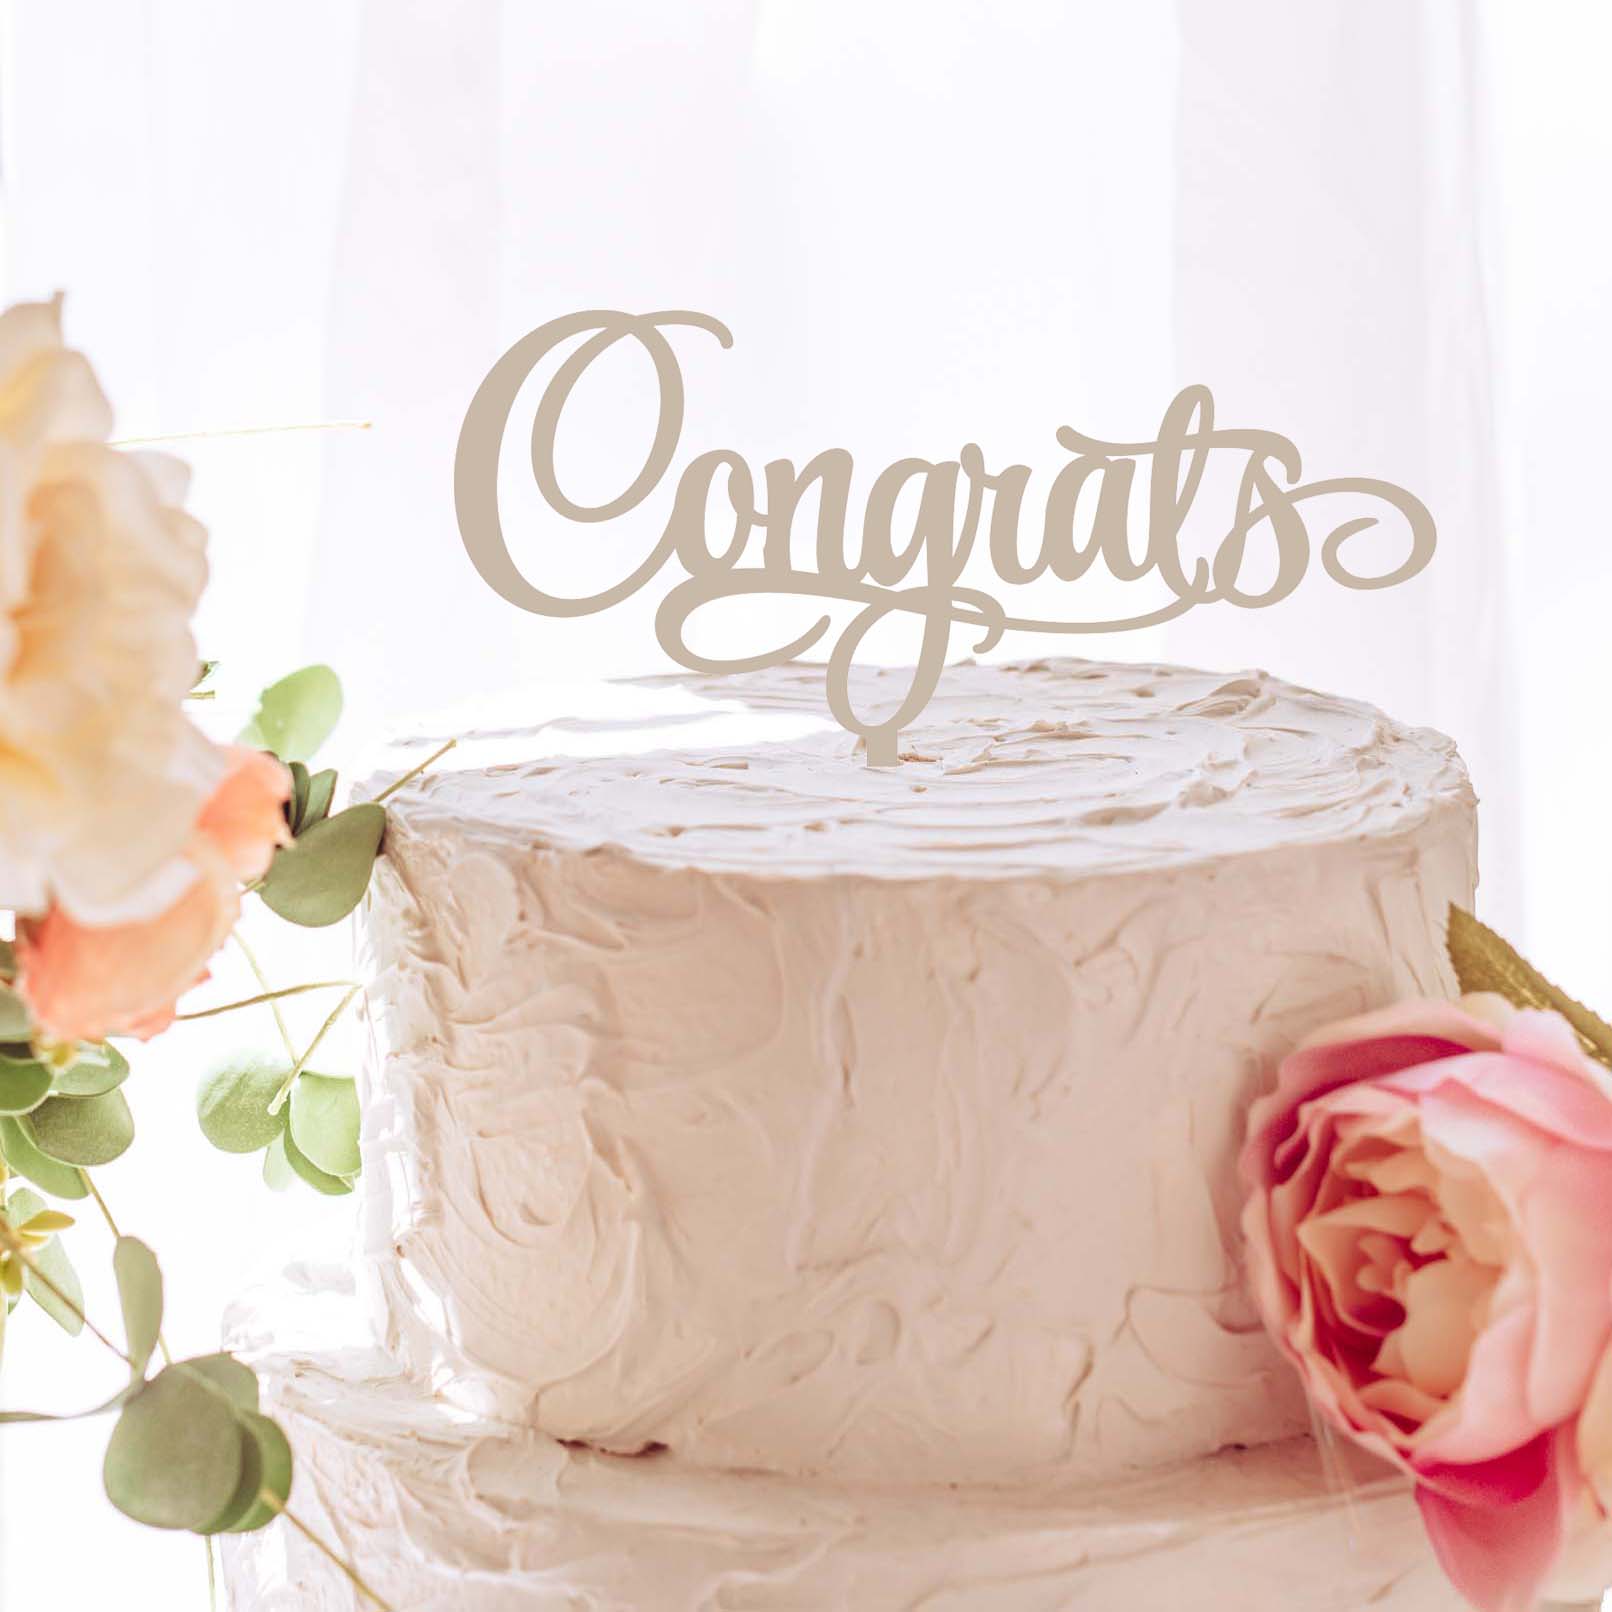 Congrats Cake Topper - Trendy Gold